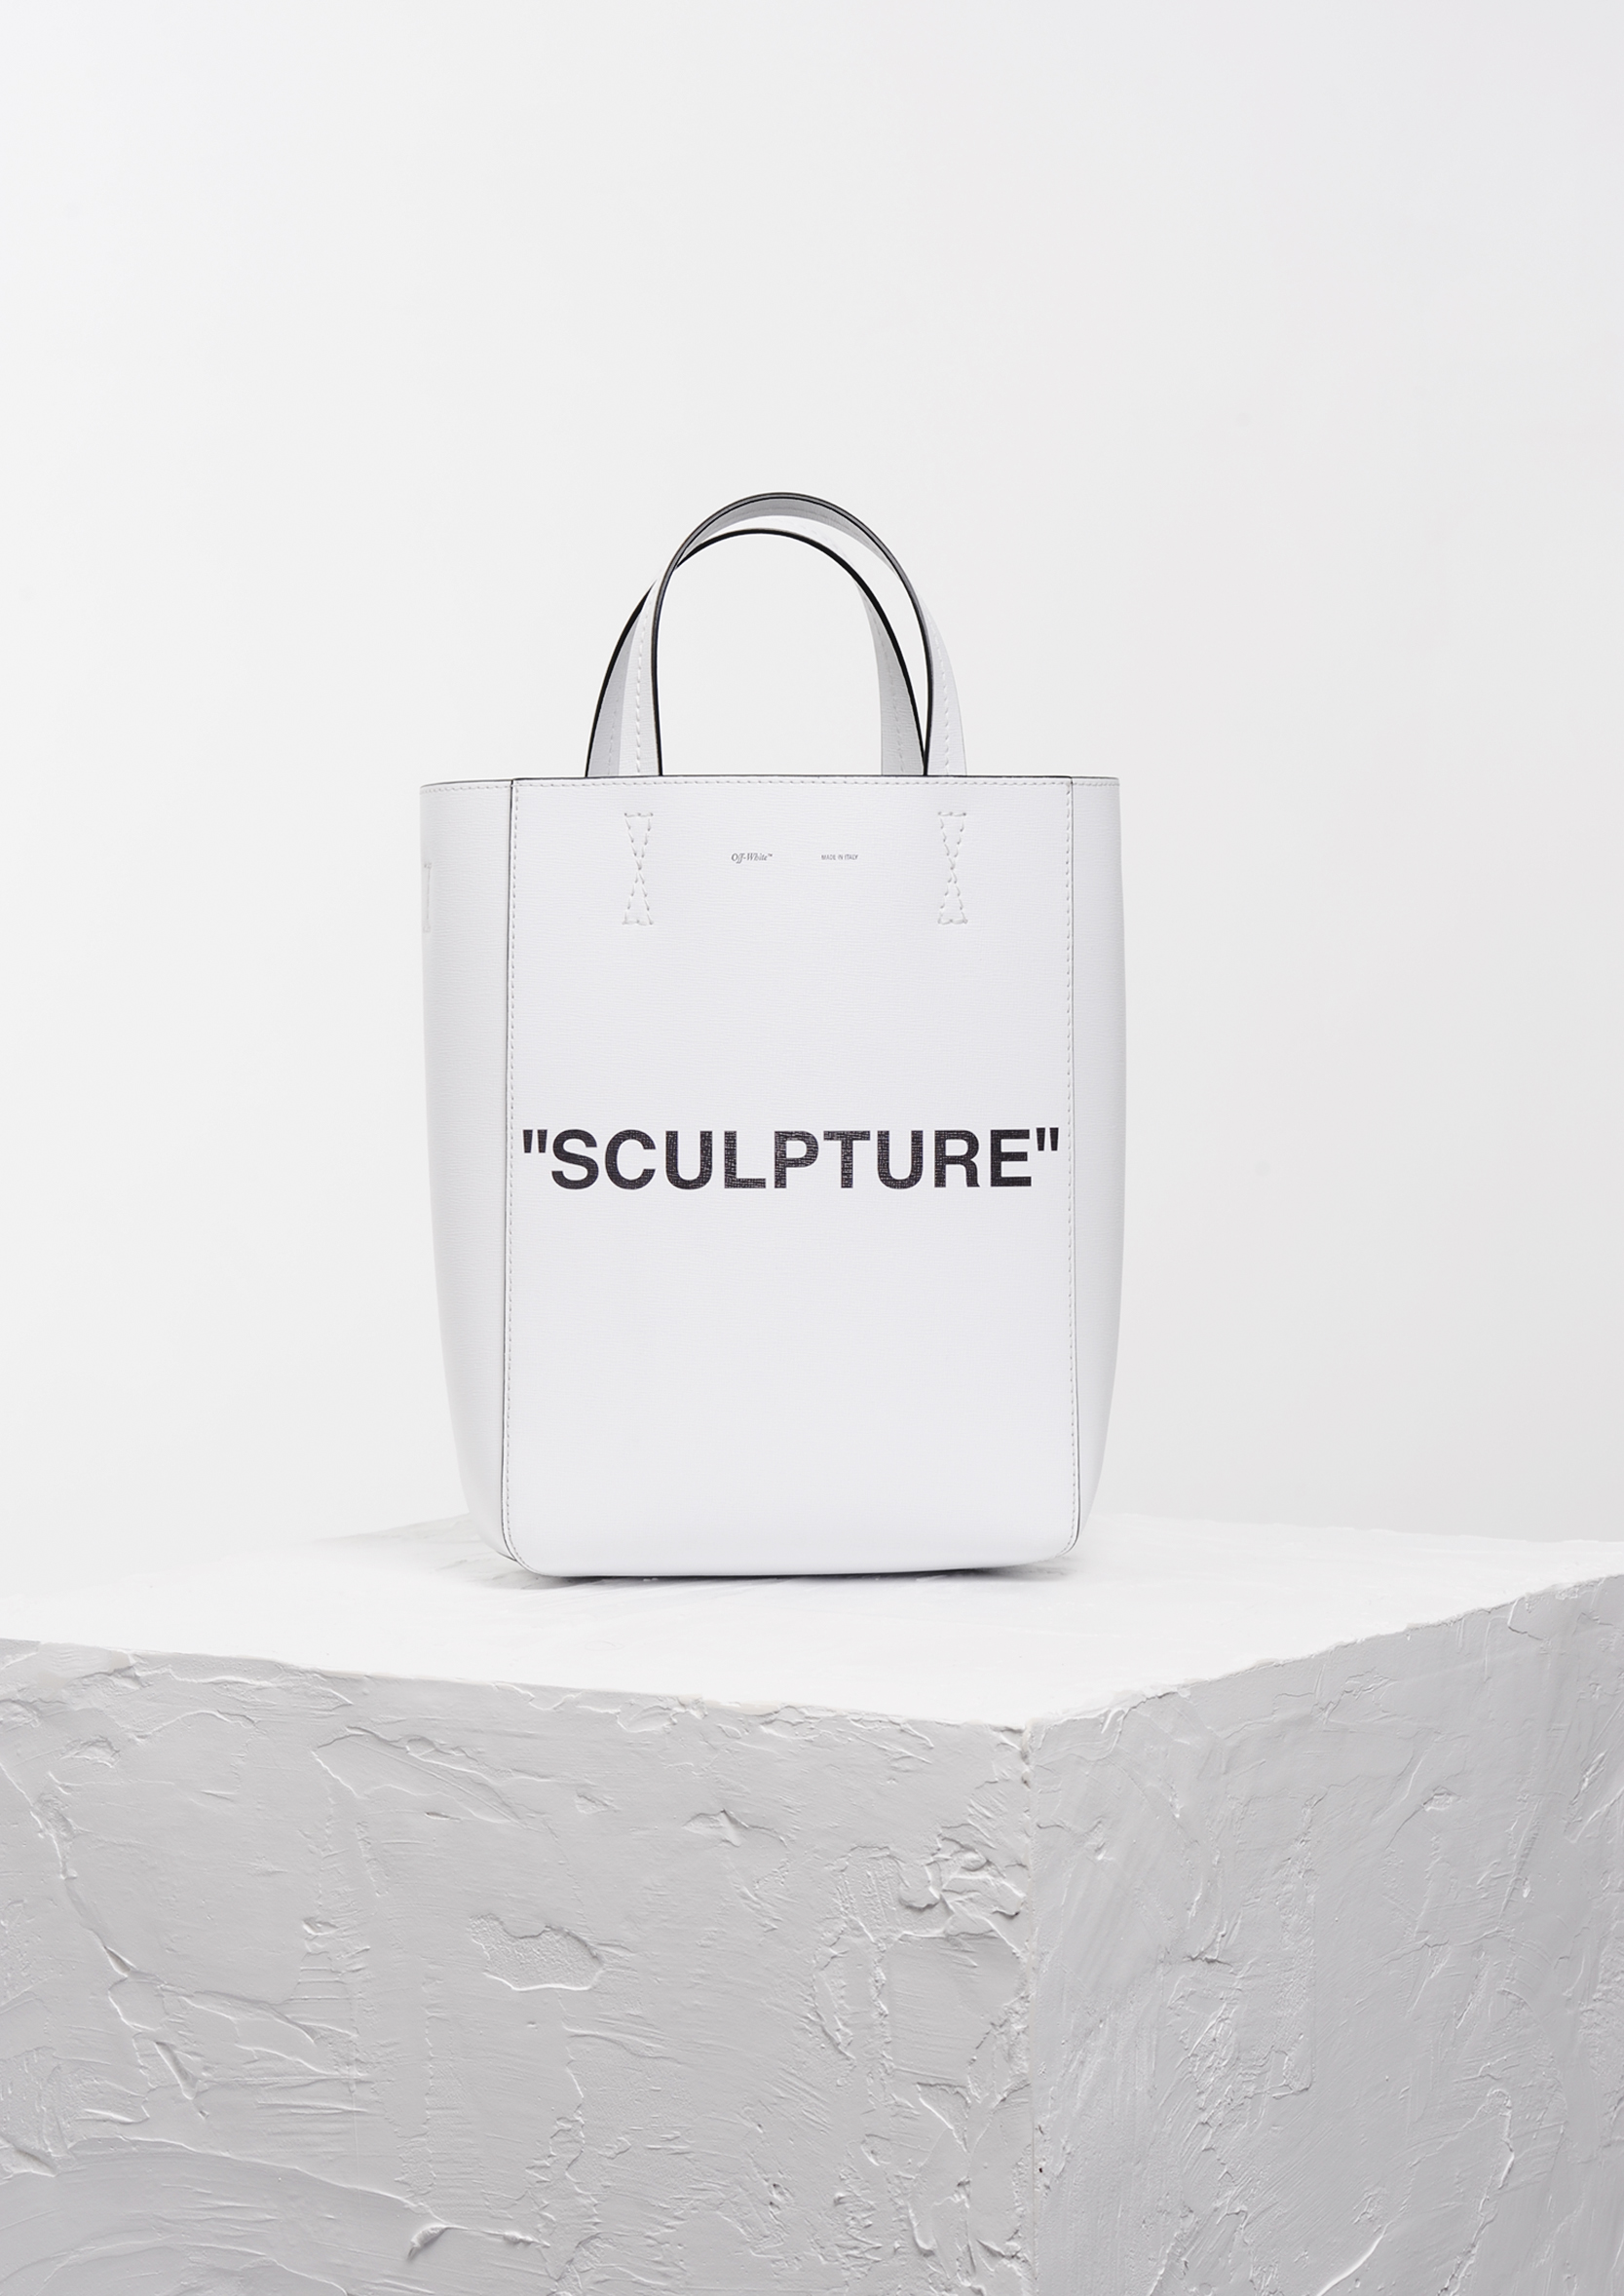 Tomgreyhound; OFF-White; Sculpture; sac; cuir; mode; fashion; blanc; accessoire-mode